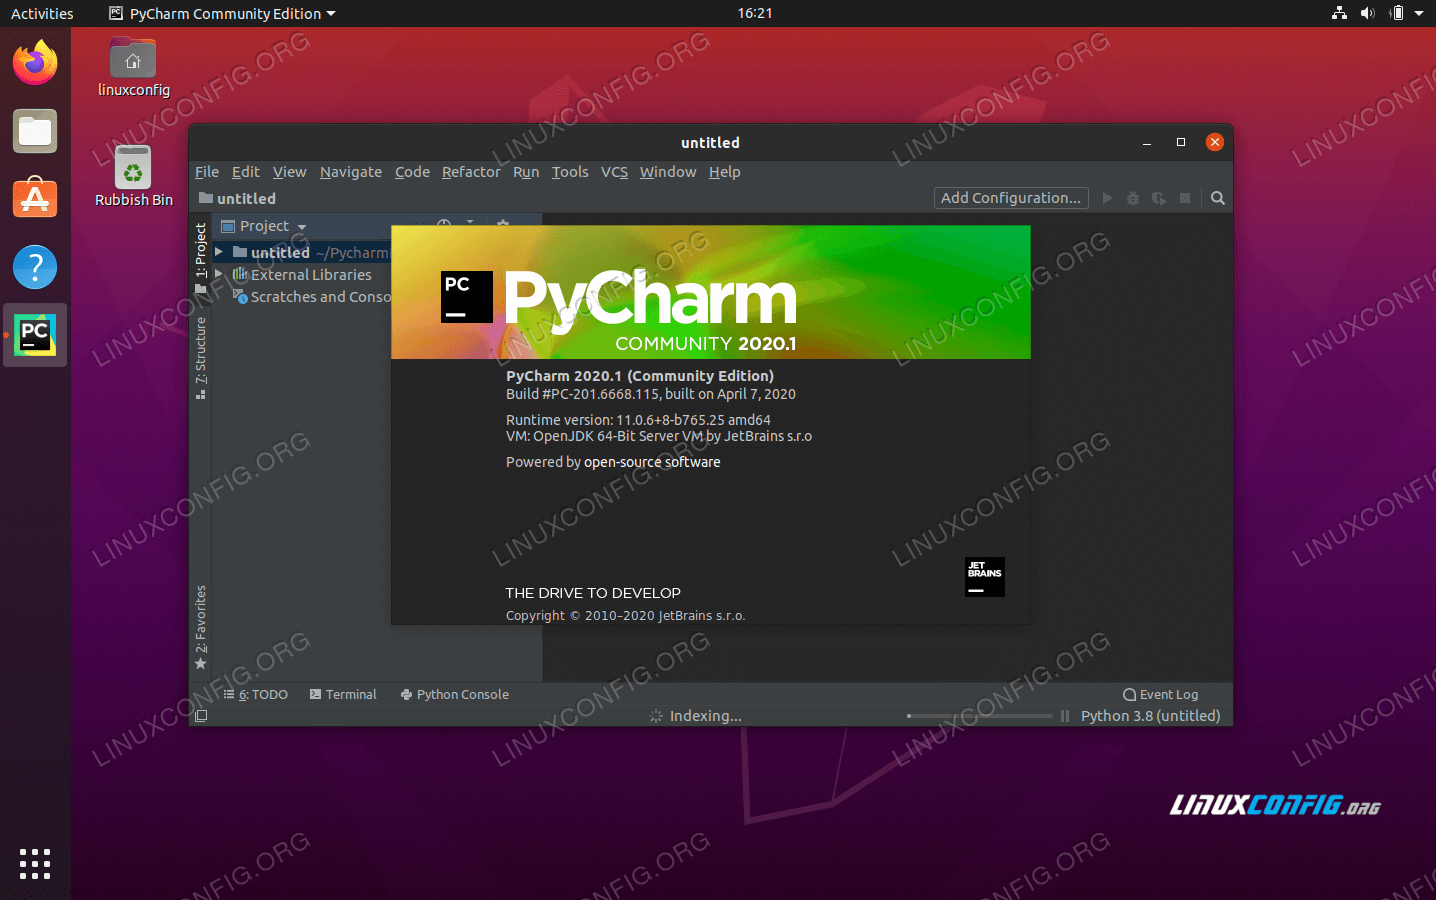 07-how-to-install-pycharm-on-ubuntu-20-04-focal-fossa-linux-desktop